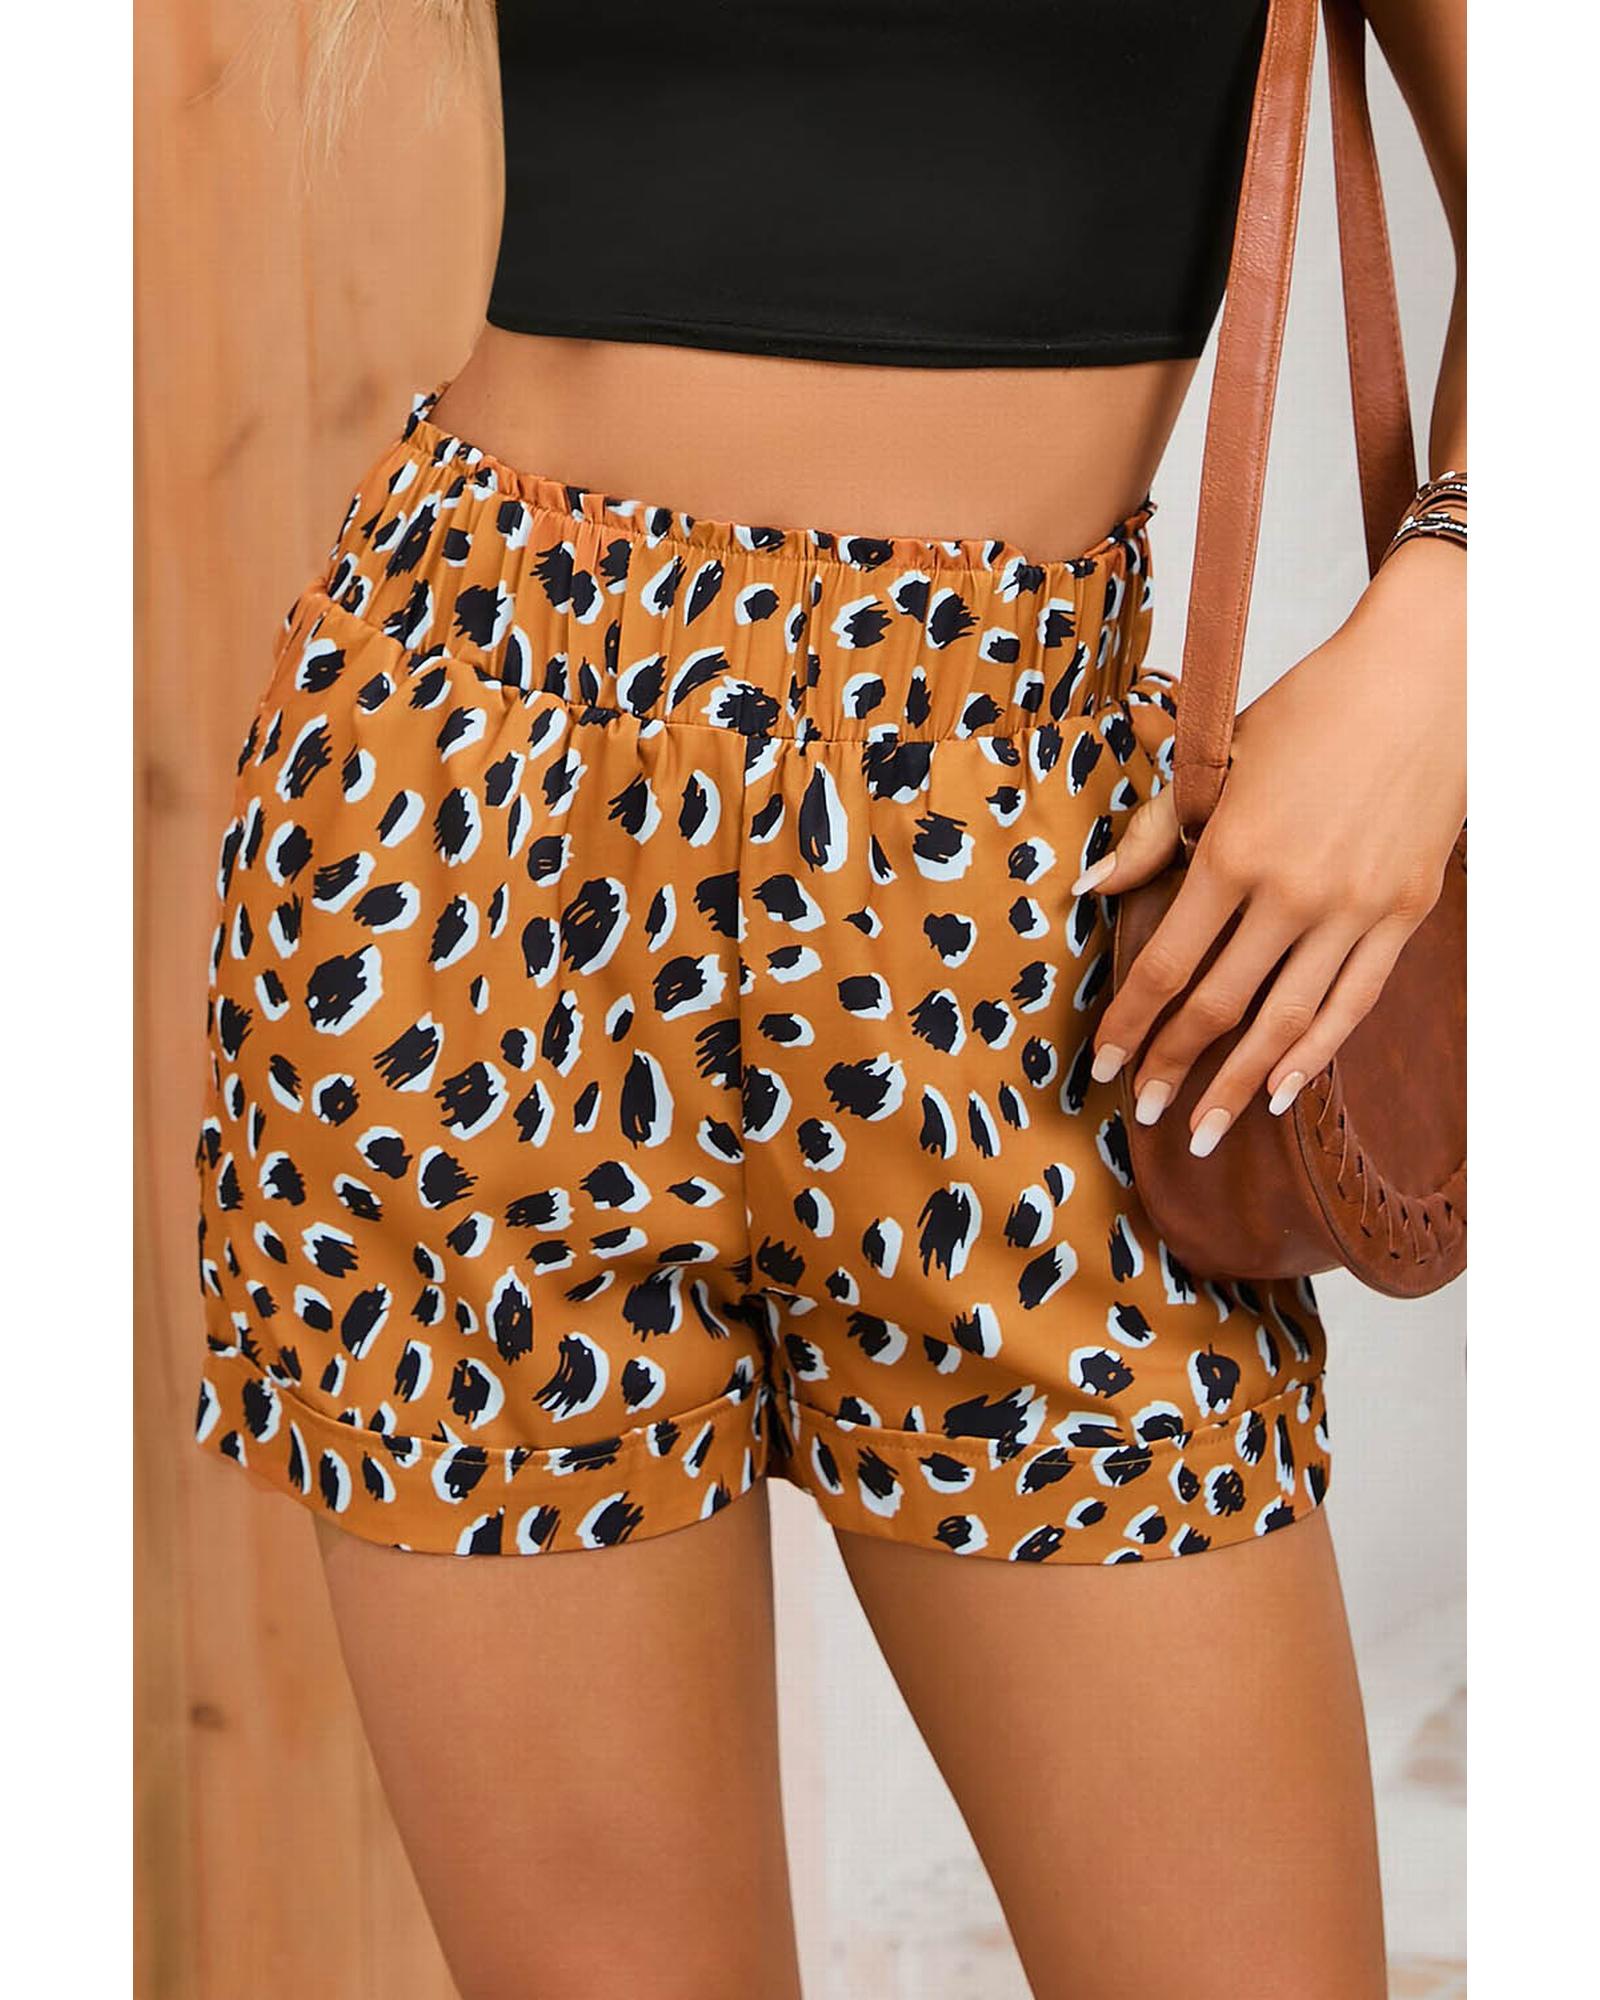 Ruffle Leopard Print Elastic Waist Shorts - XL